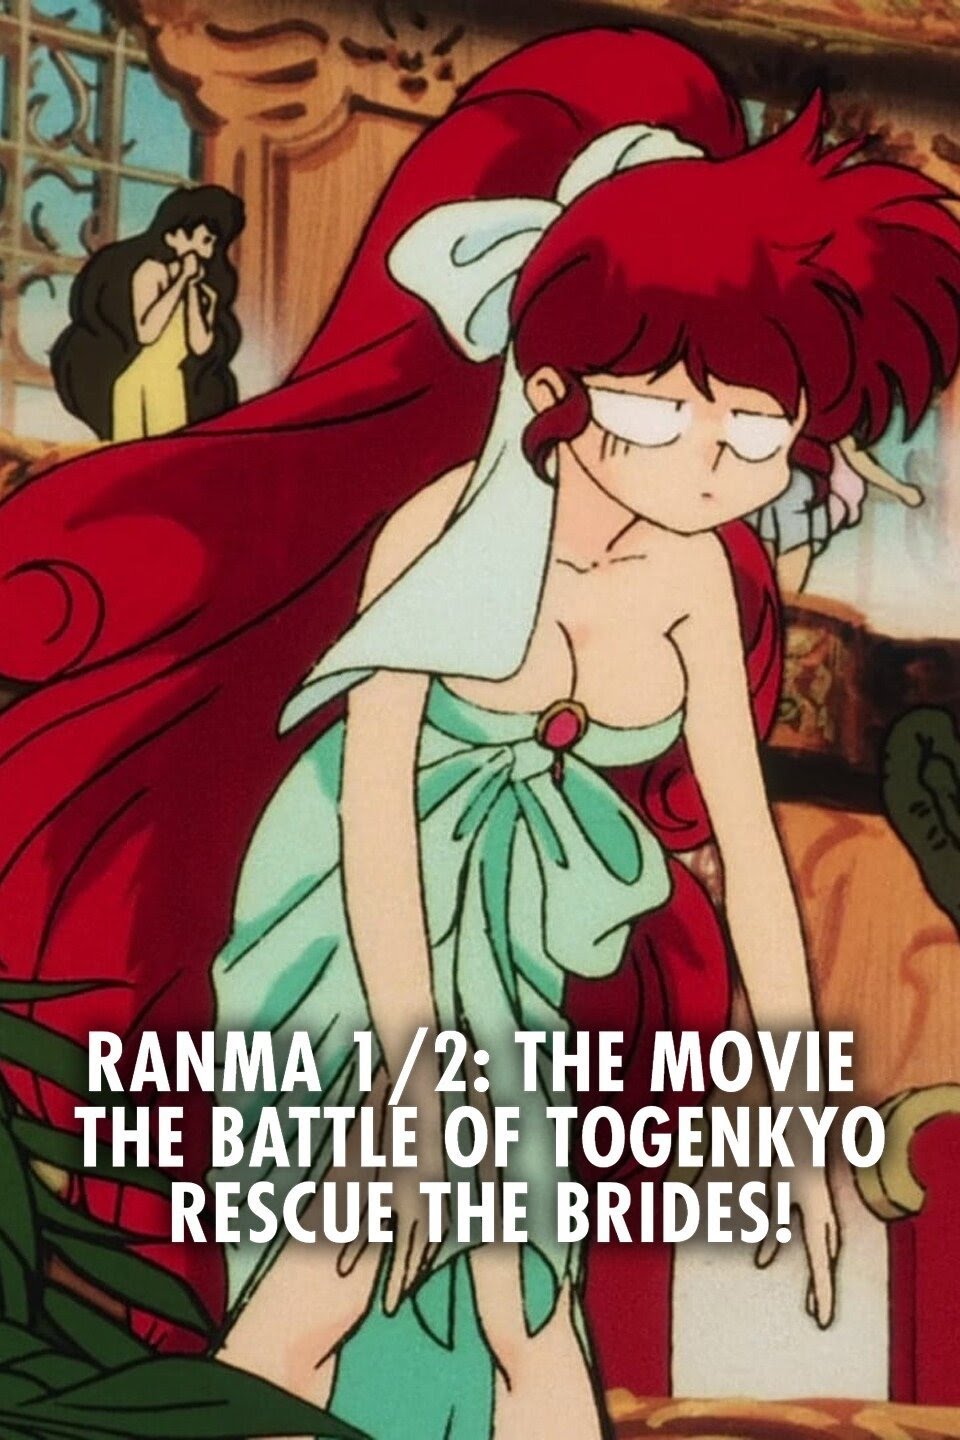 Ranma ½ The Movie 2 The Battle of Togenkyo Rescue the Brides! (1992)รันม่า1/2 เดอะมูฟวี่ : บุกตะลุยเมืองจีน พากย์ไทย